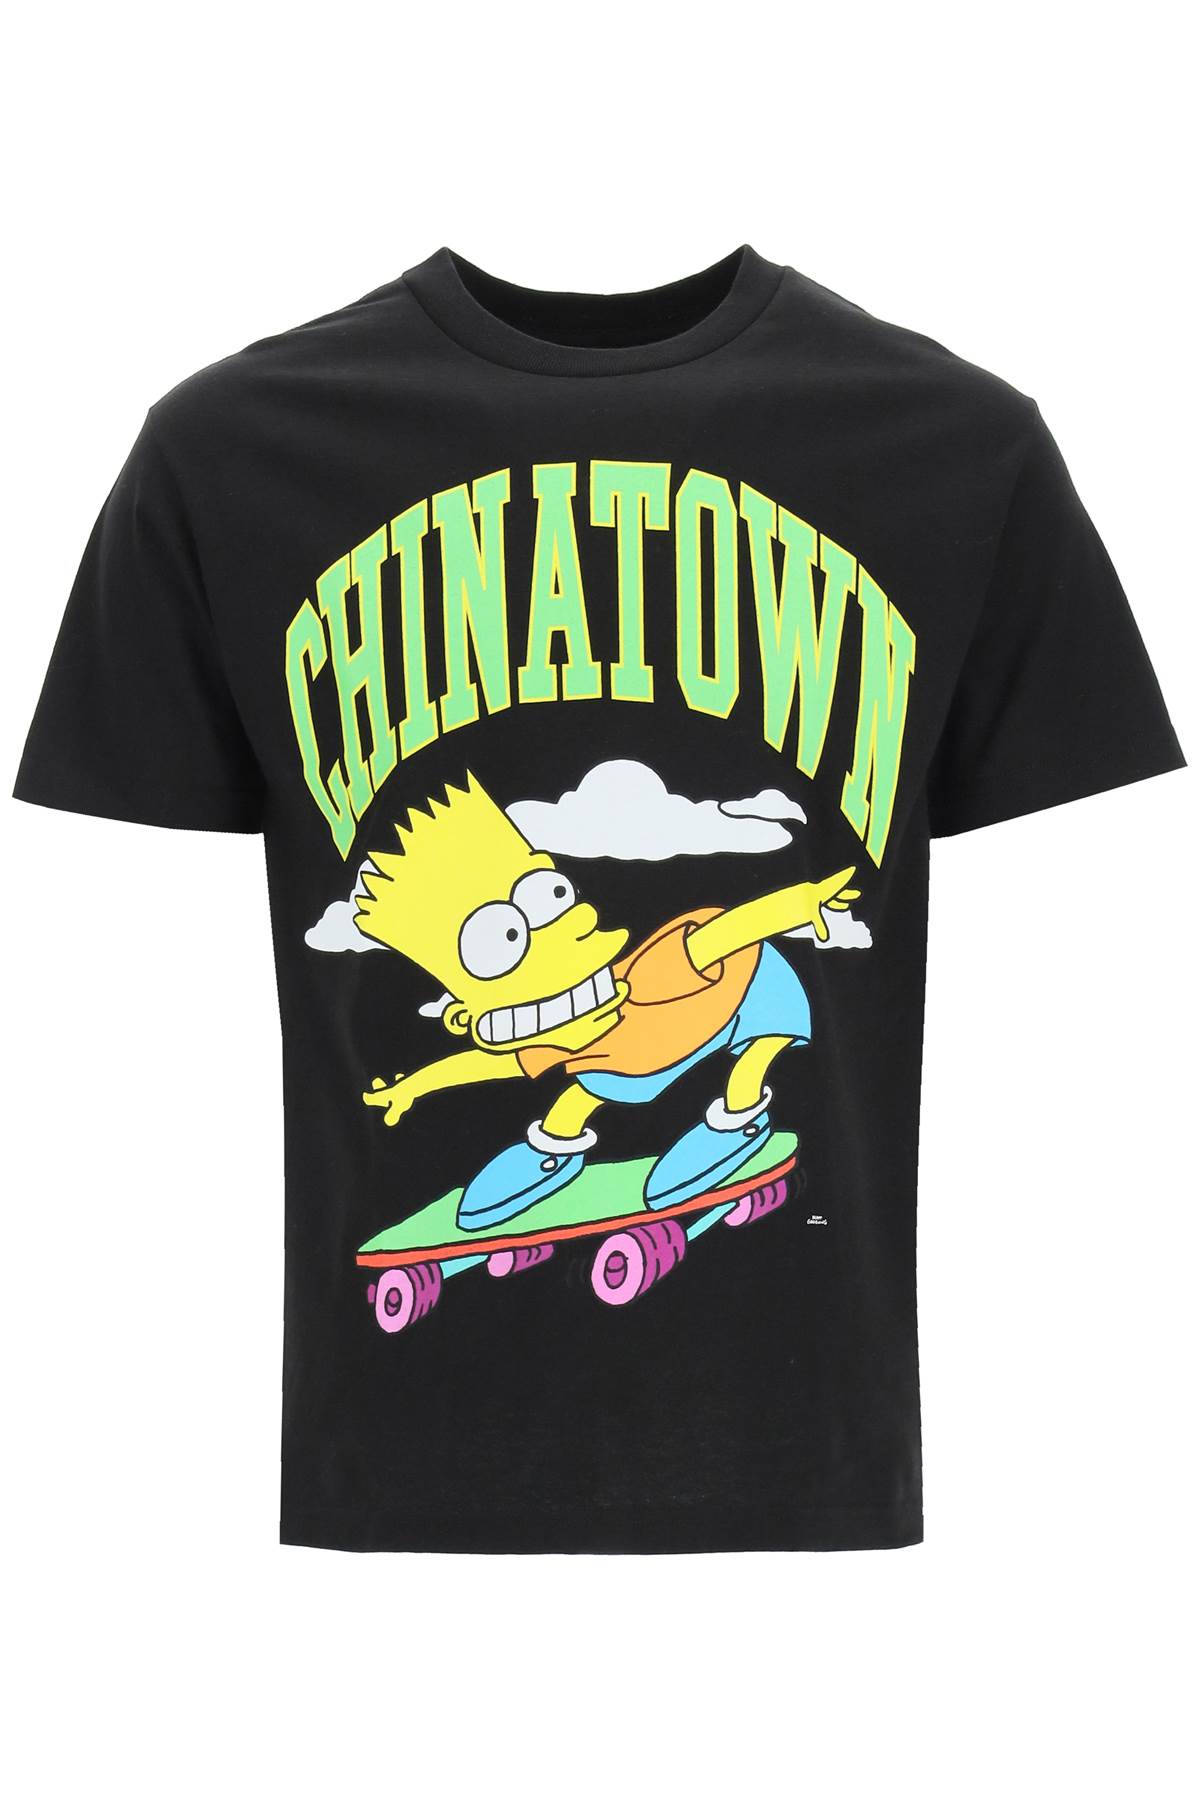 Market X The Simpsons cowabunga Arc Print T-shirt